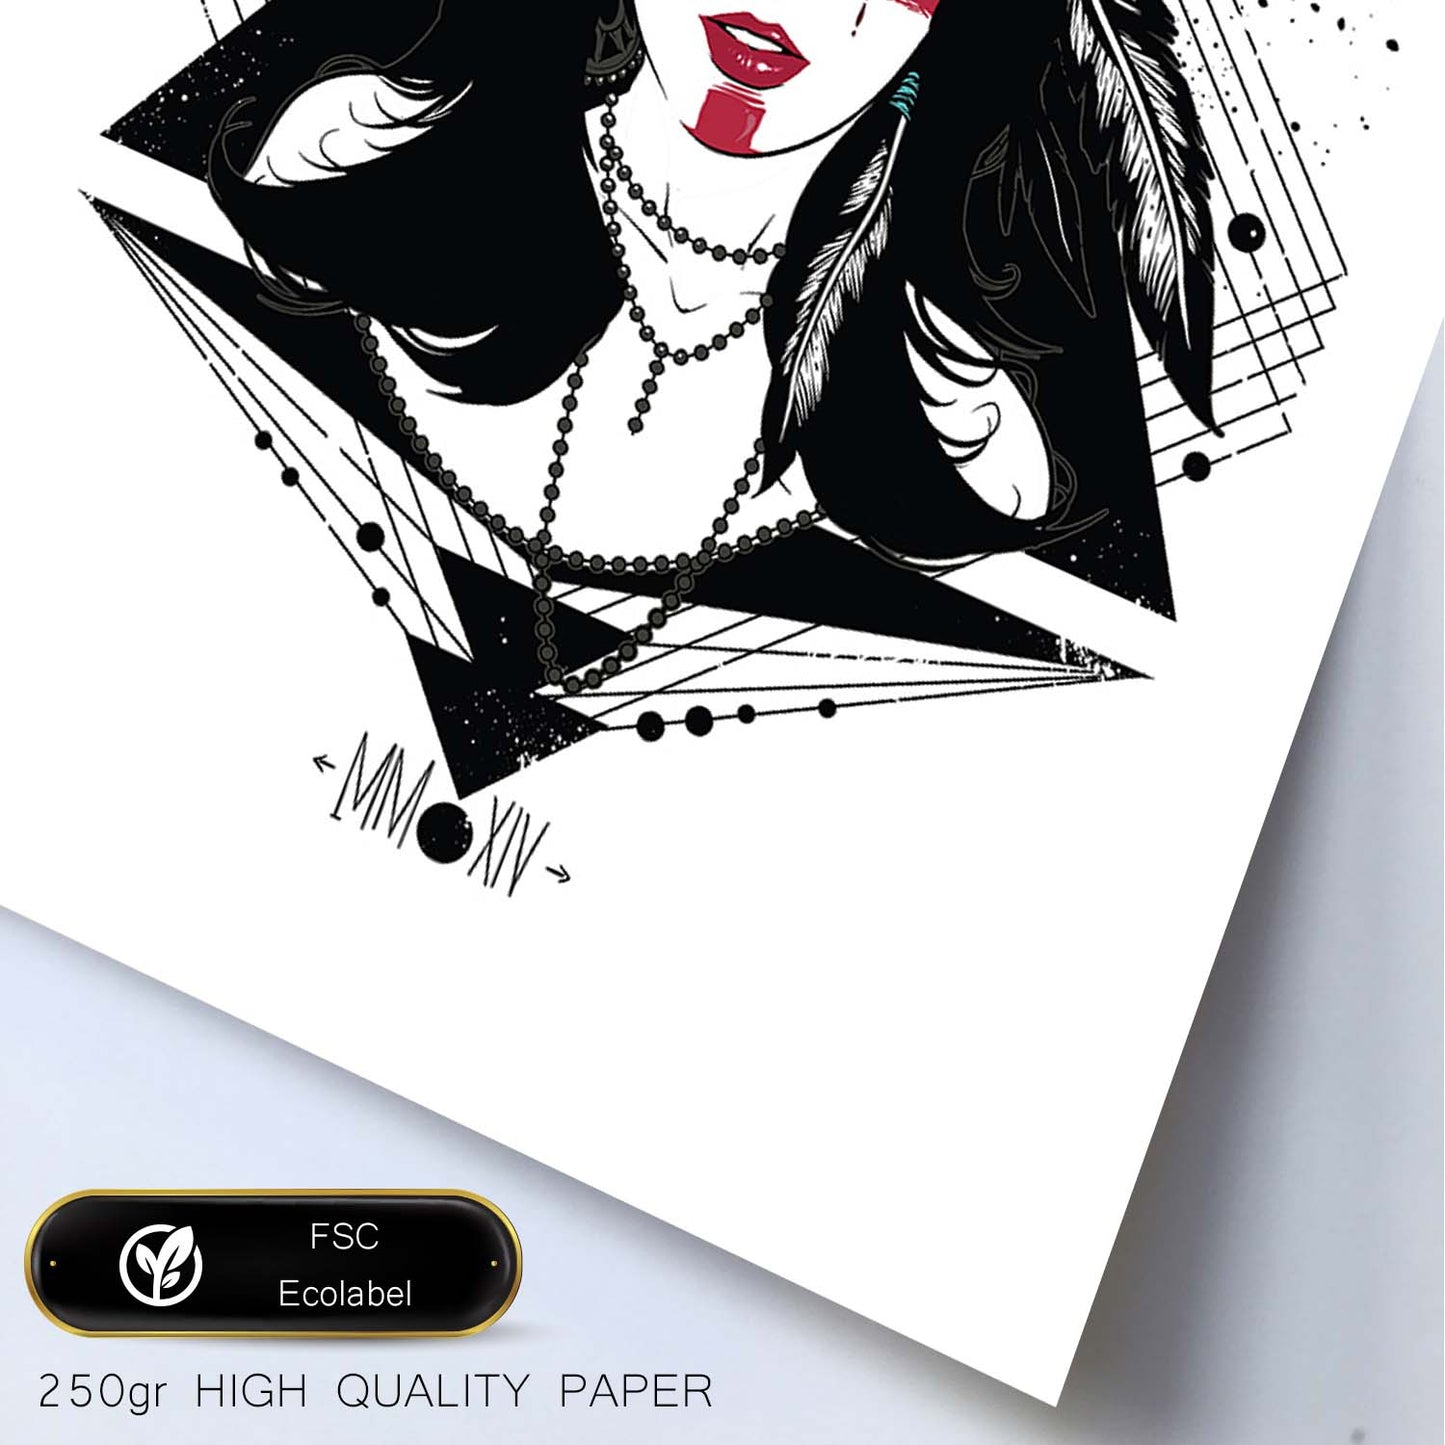 Poster de Mujer con plumas de sangre. Lámina decorativa de diseño.-Artwork-Nacnic-Nacnic Estudio SL